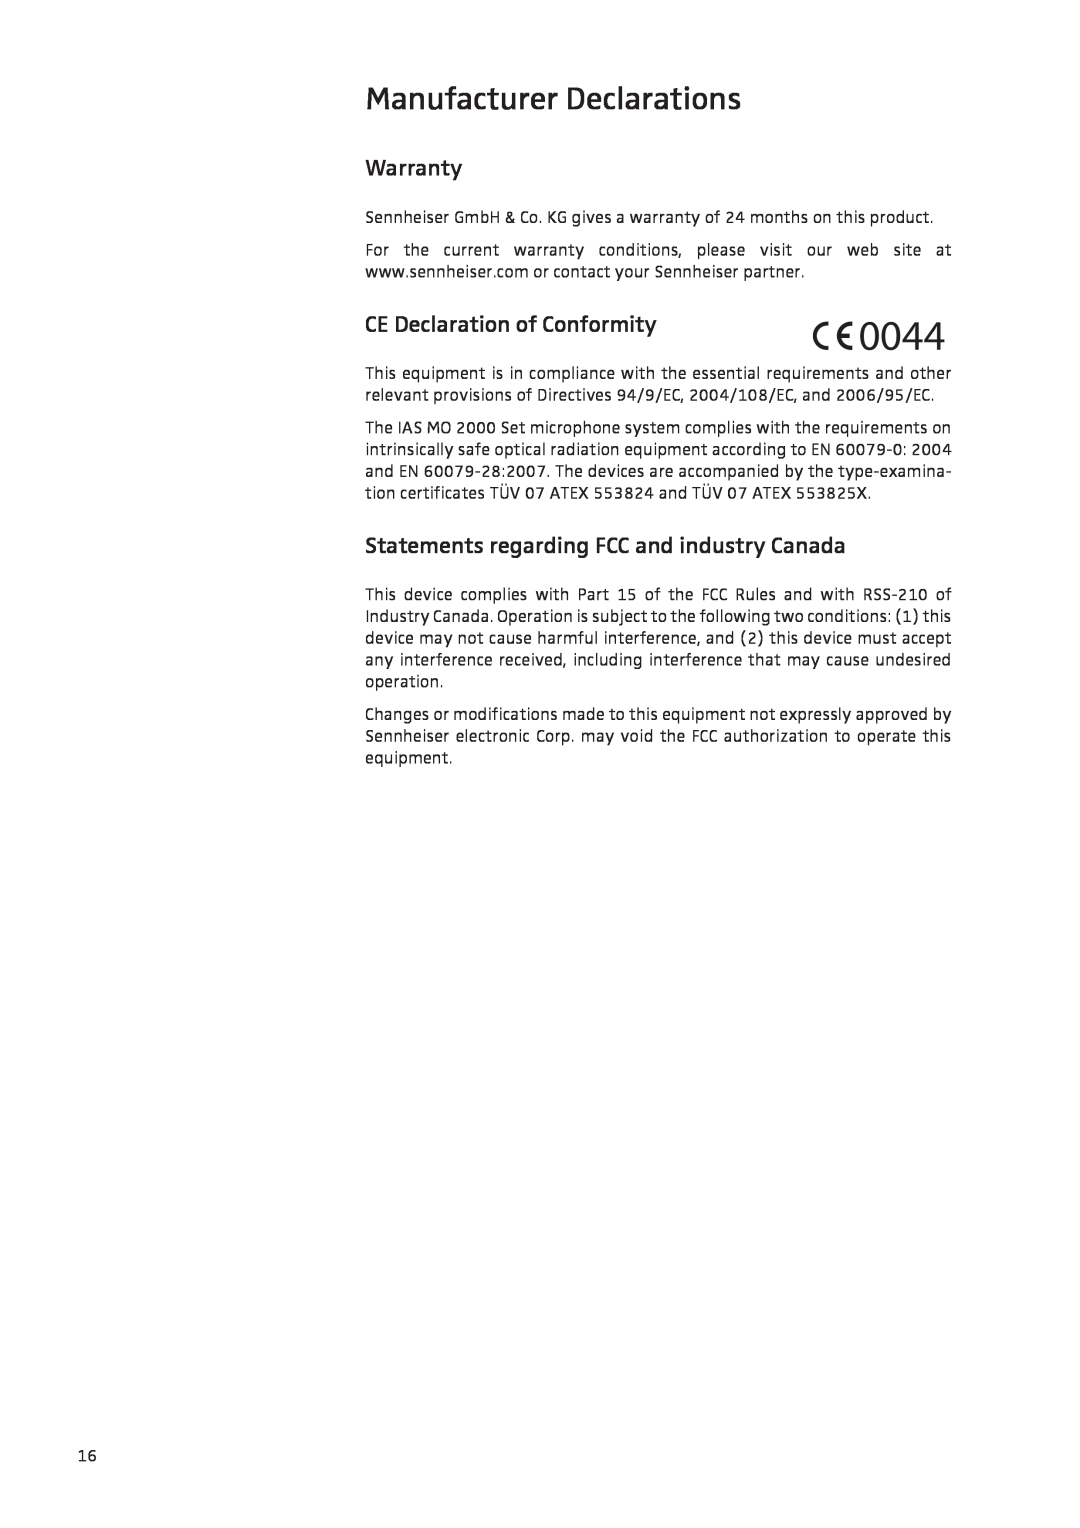 Sennheiser IAS-MO 2000 manual Manufacturer Declarations, Warranty, CE Declaration of Conformity, 0044 